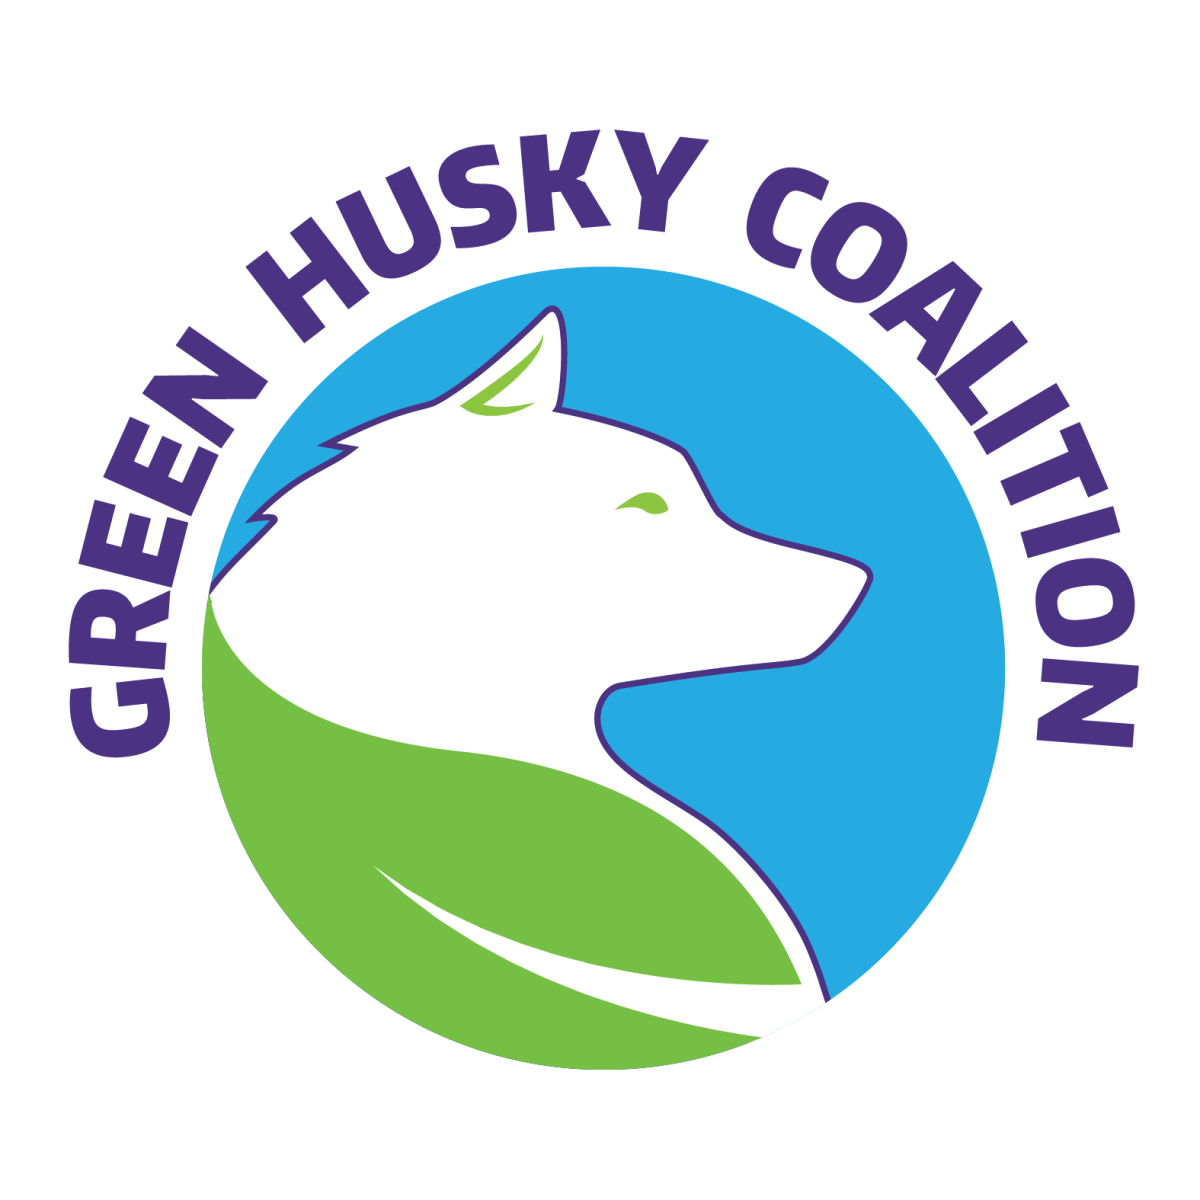 Green Husky Coalition logo